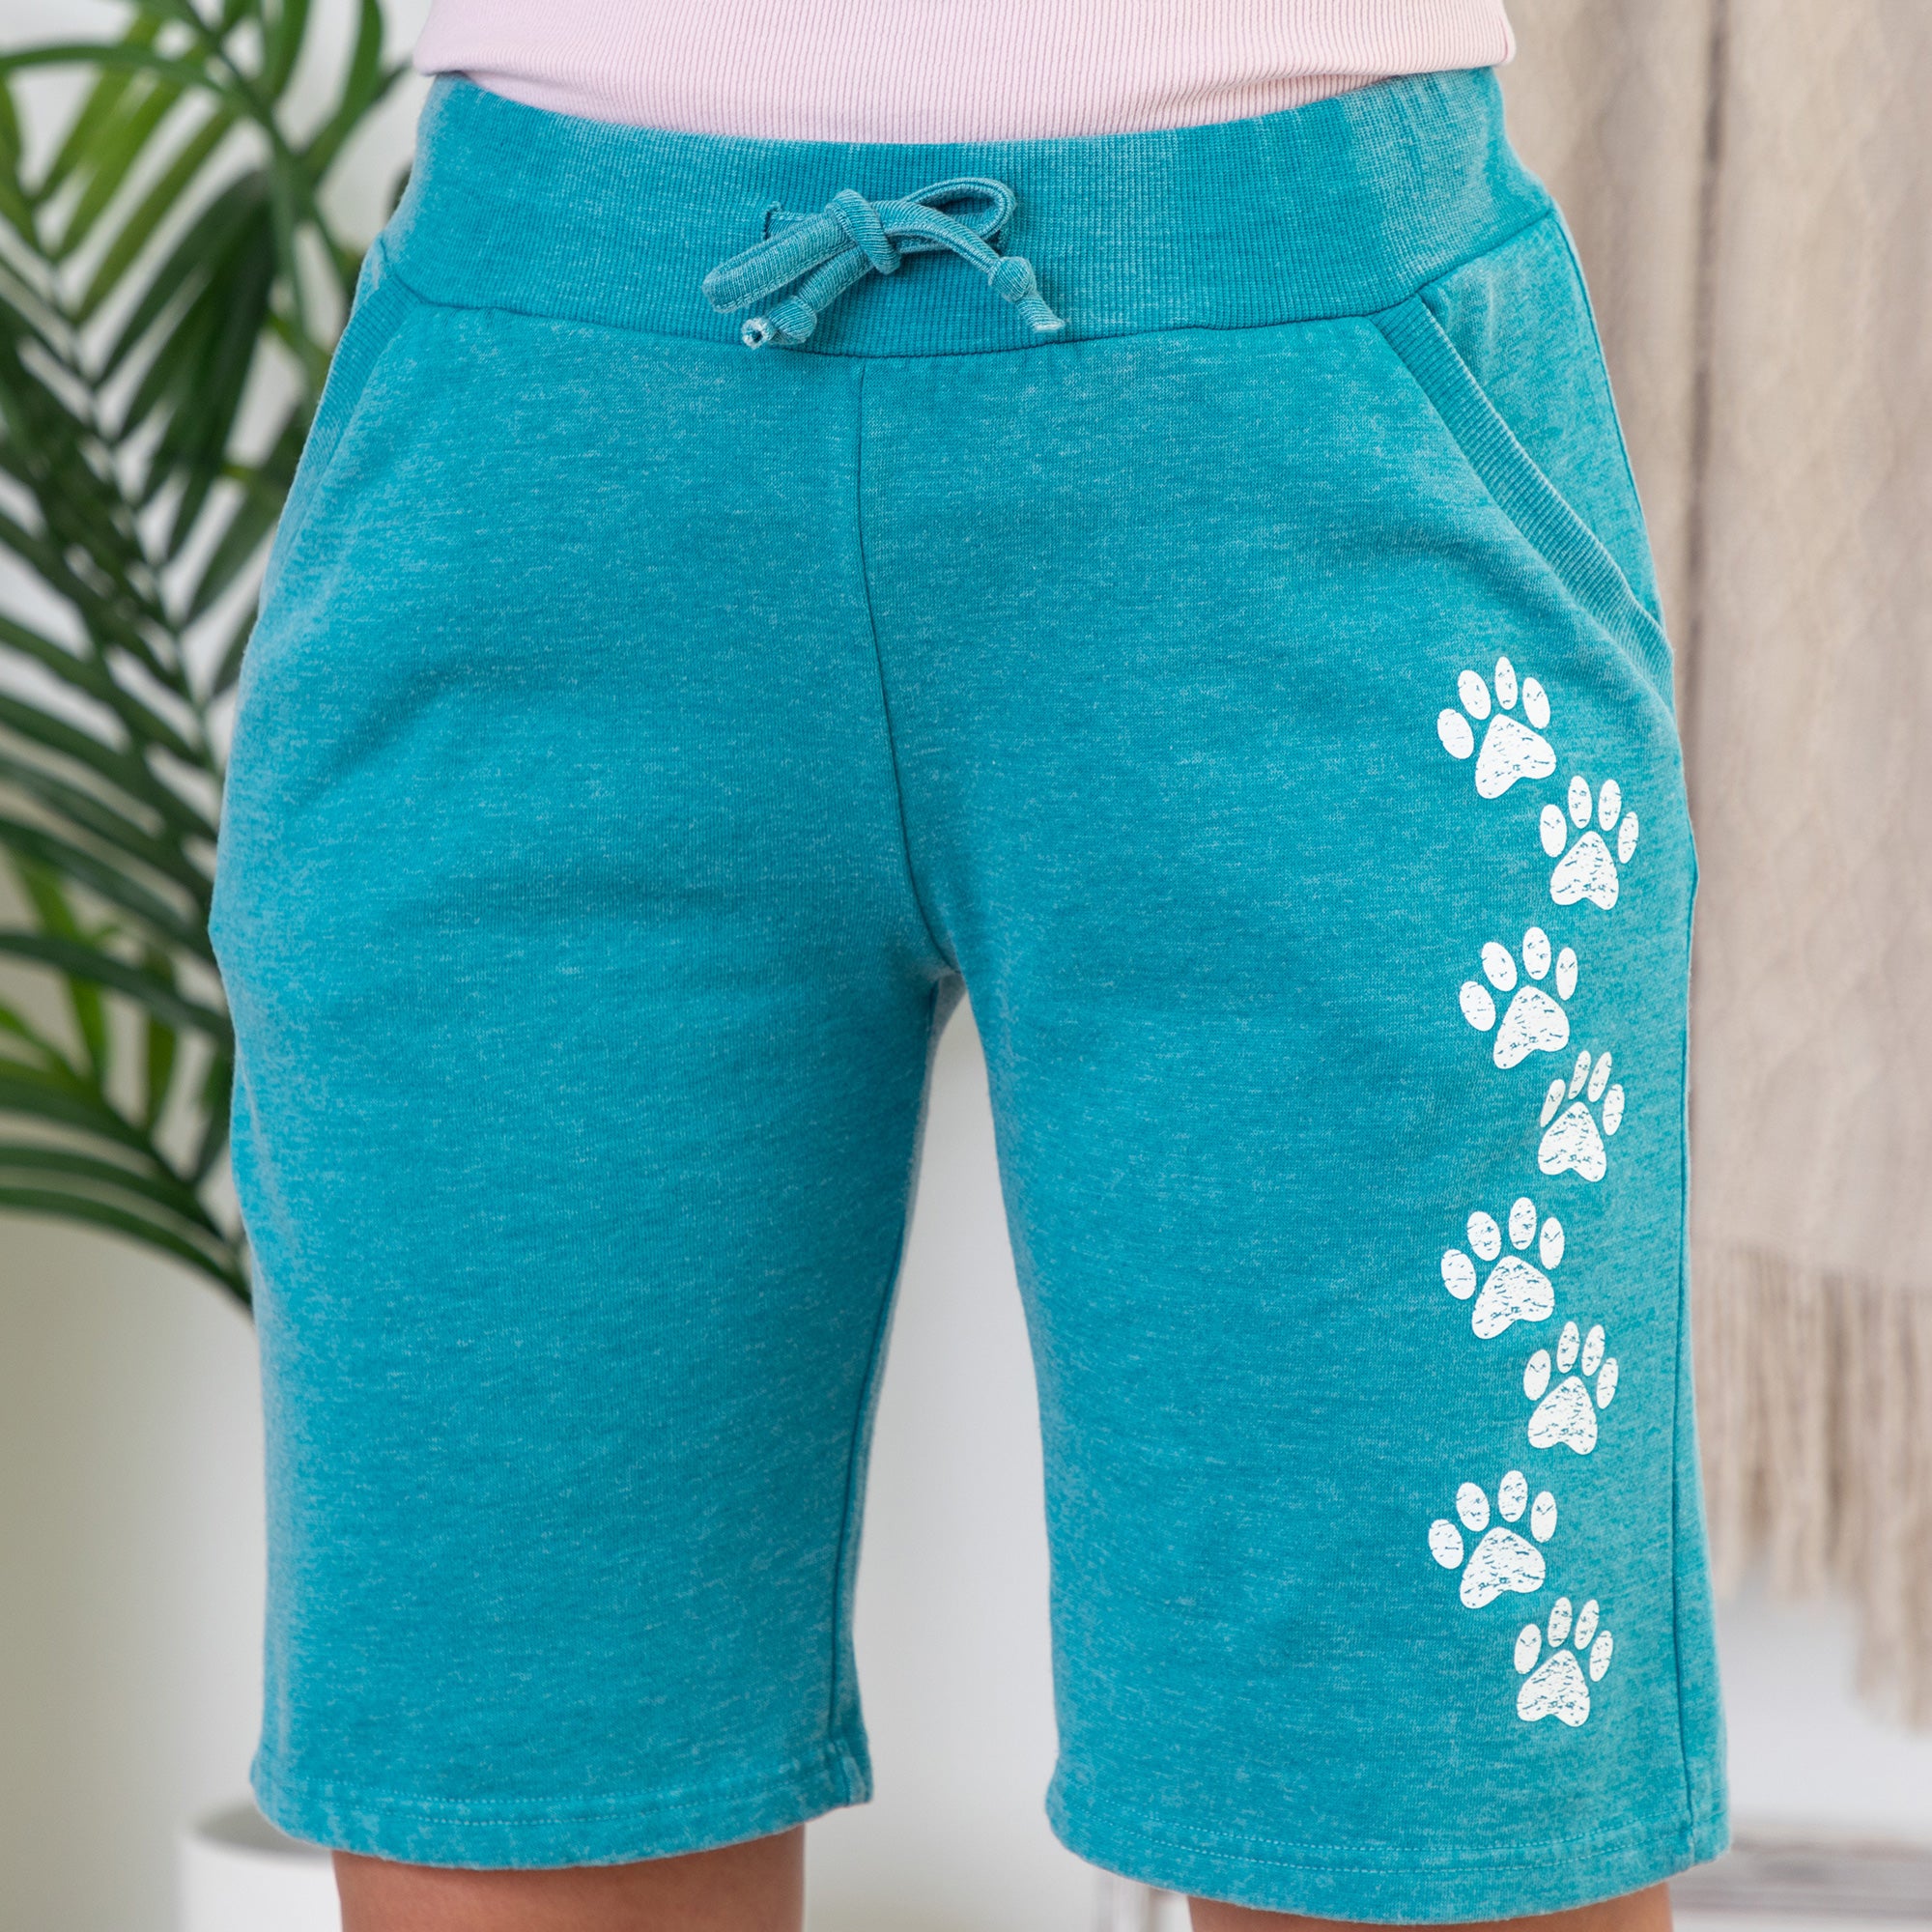 Walking Paws Burnout Board Shorts - Turquoise - 1X